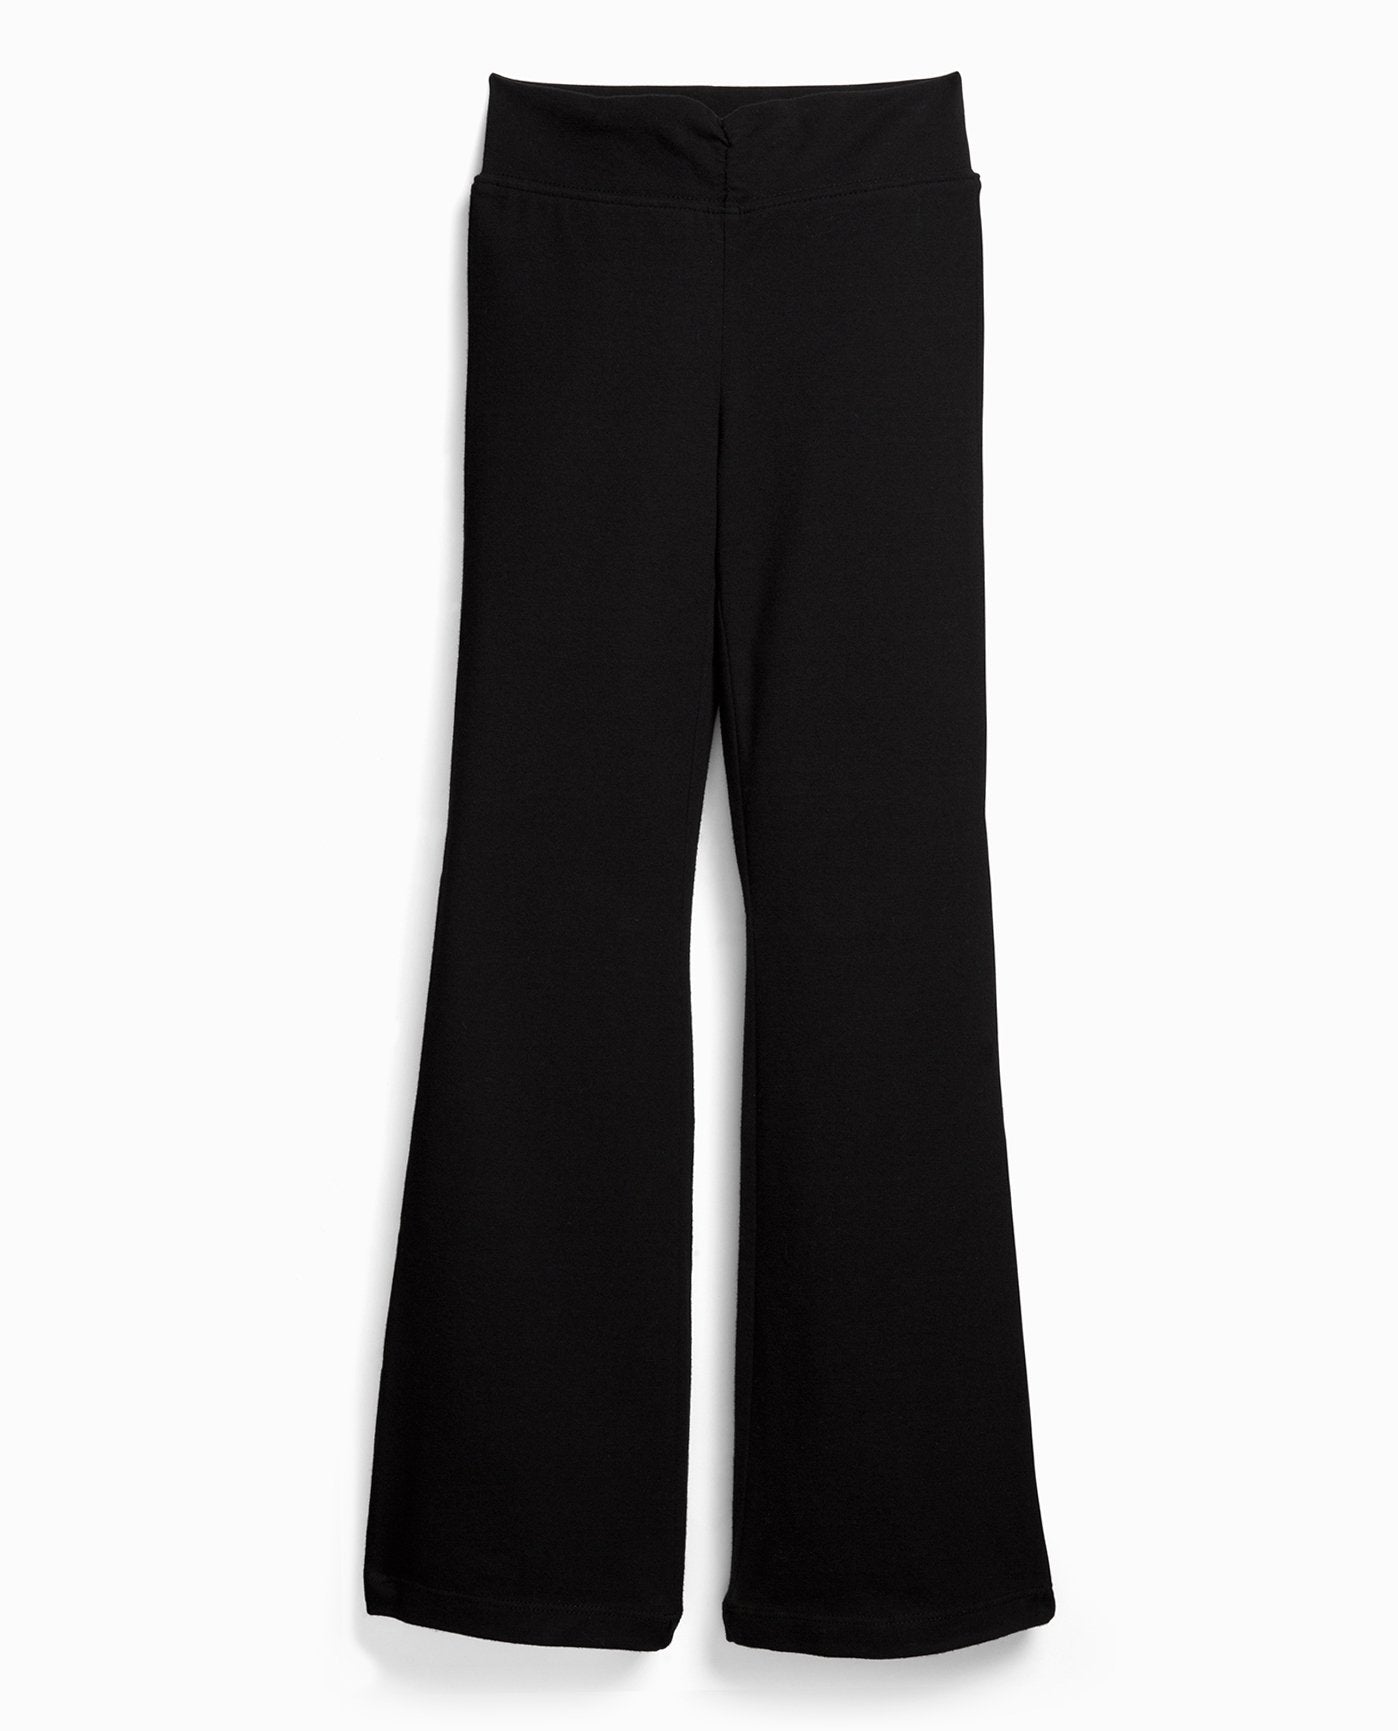 Danskin Women's Drawcord Pant, Black, 1X 